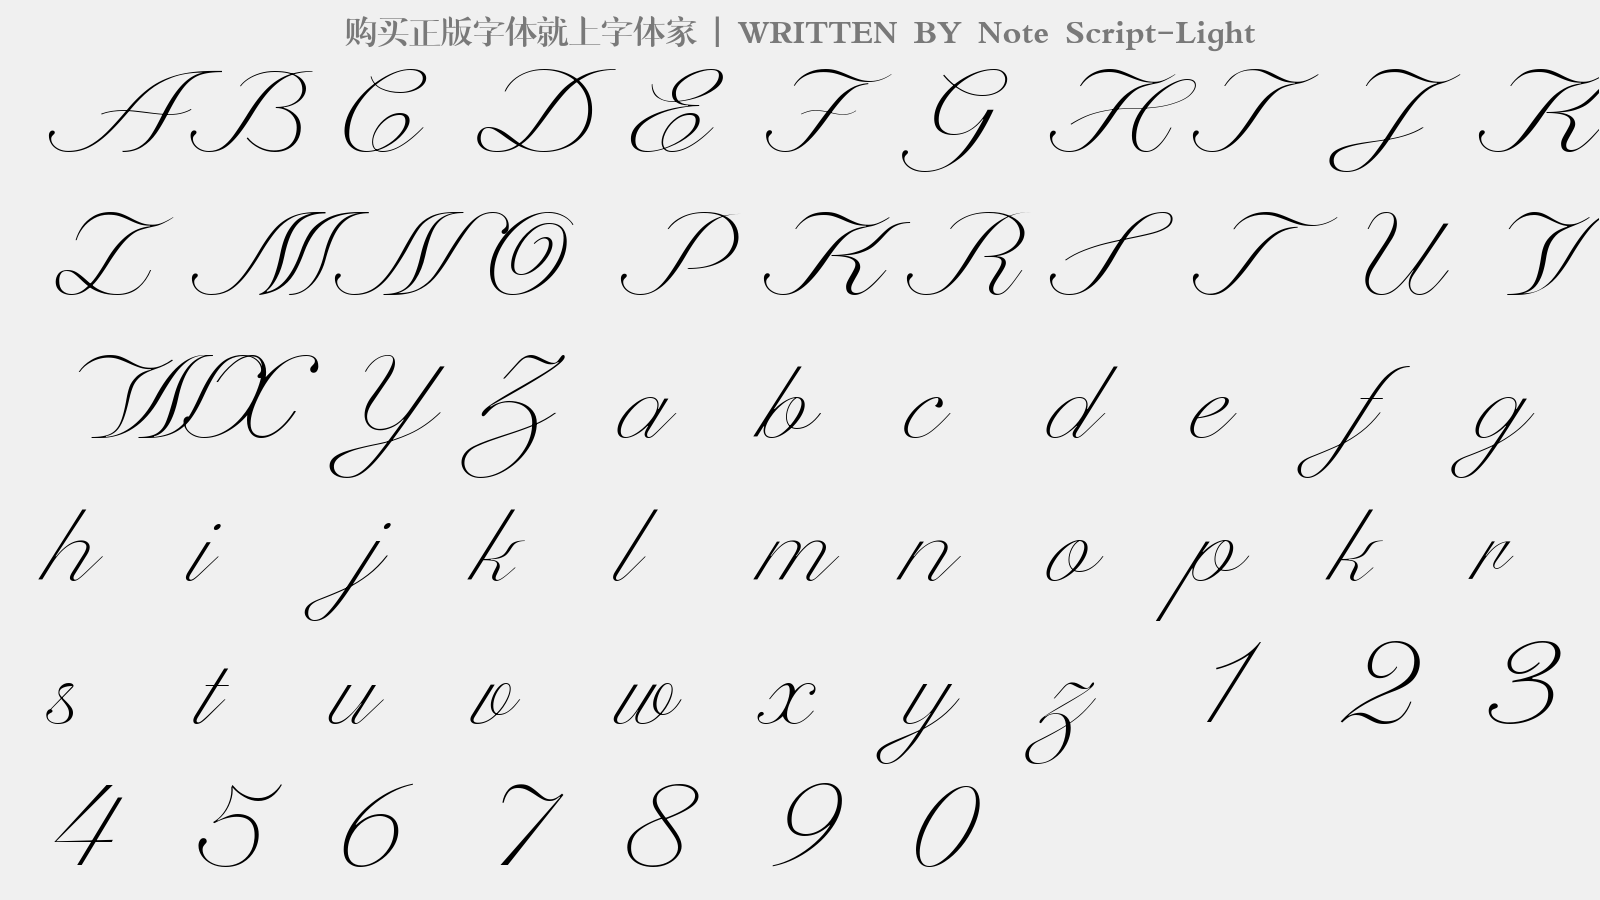 Note Script-Light - 大写字母/小写字母/数字